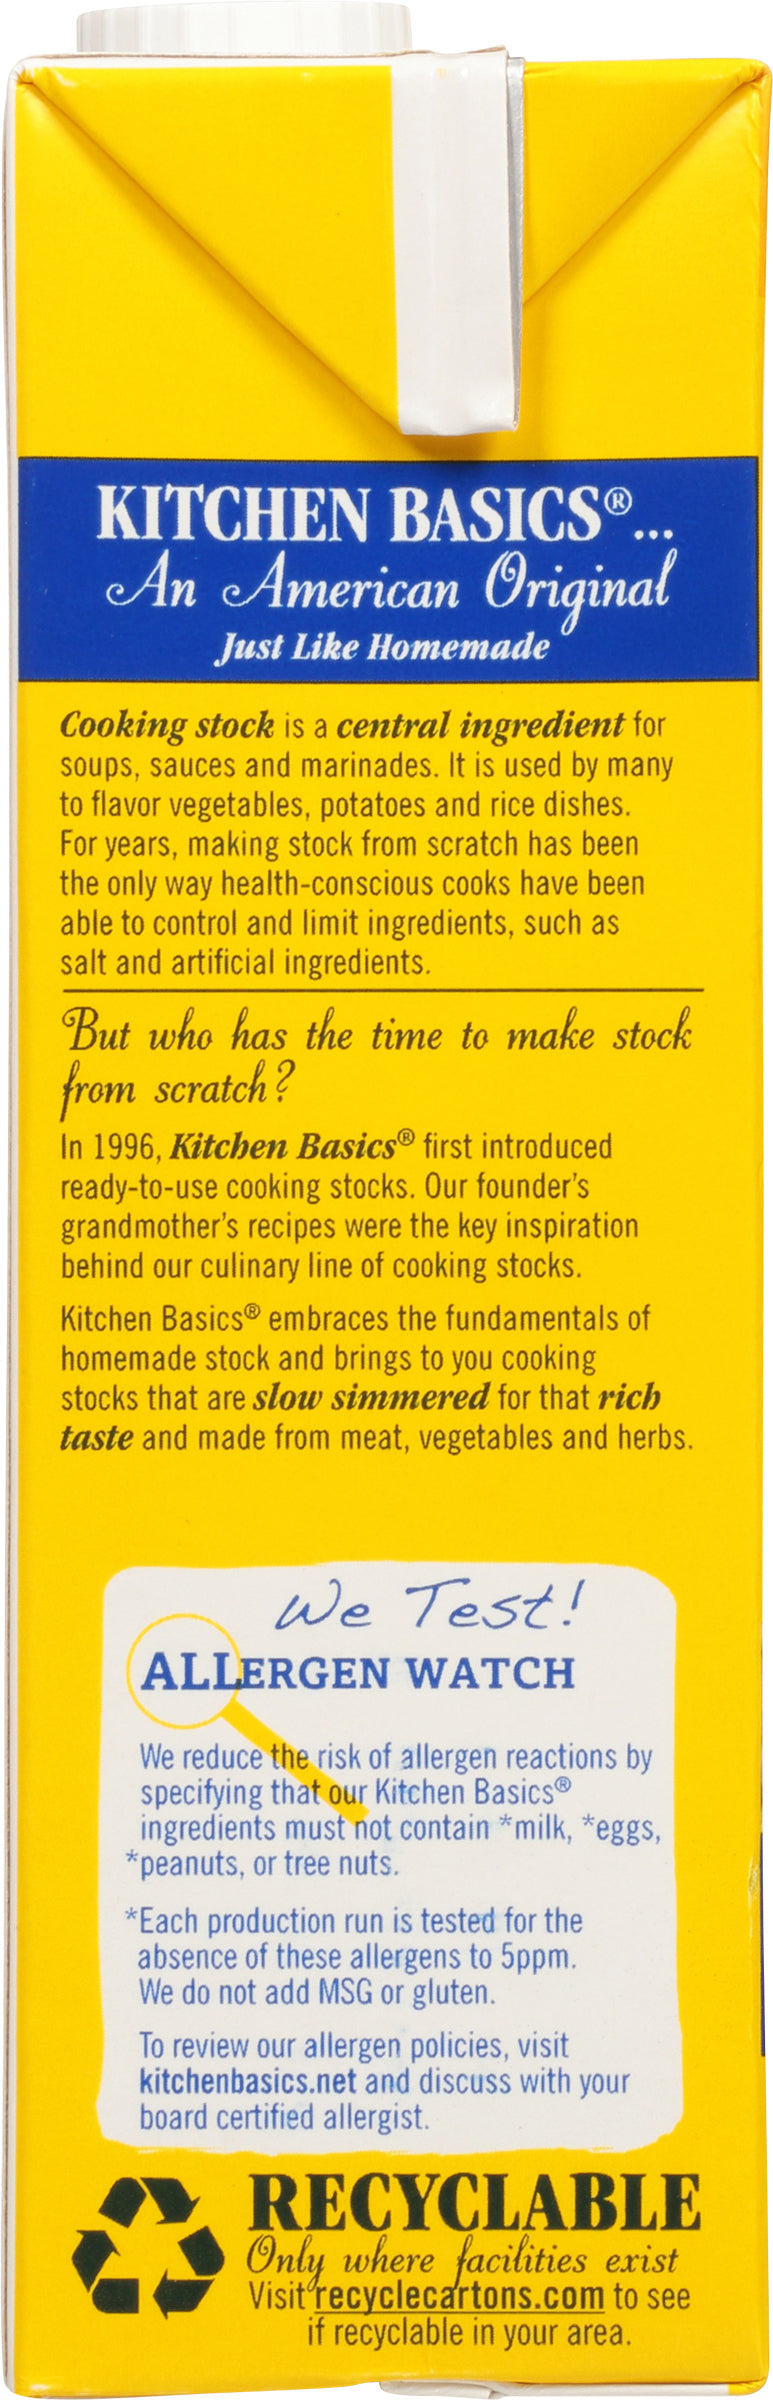 Kitchen Basics Chicken Stock-32 oz.-12/Case